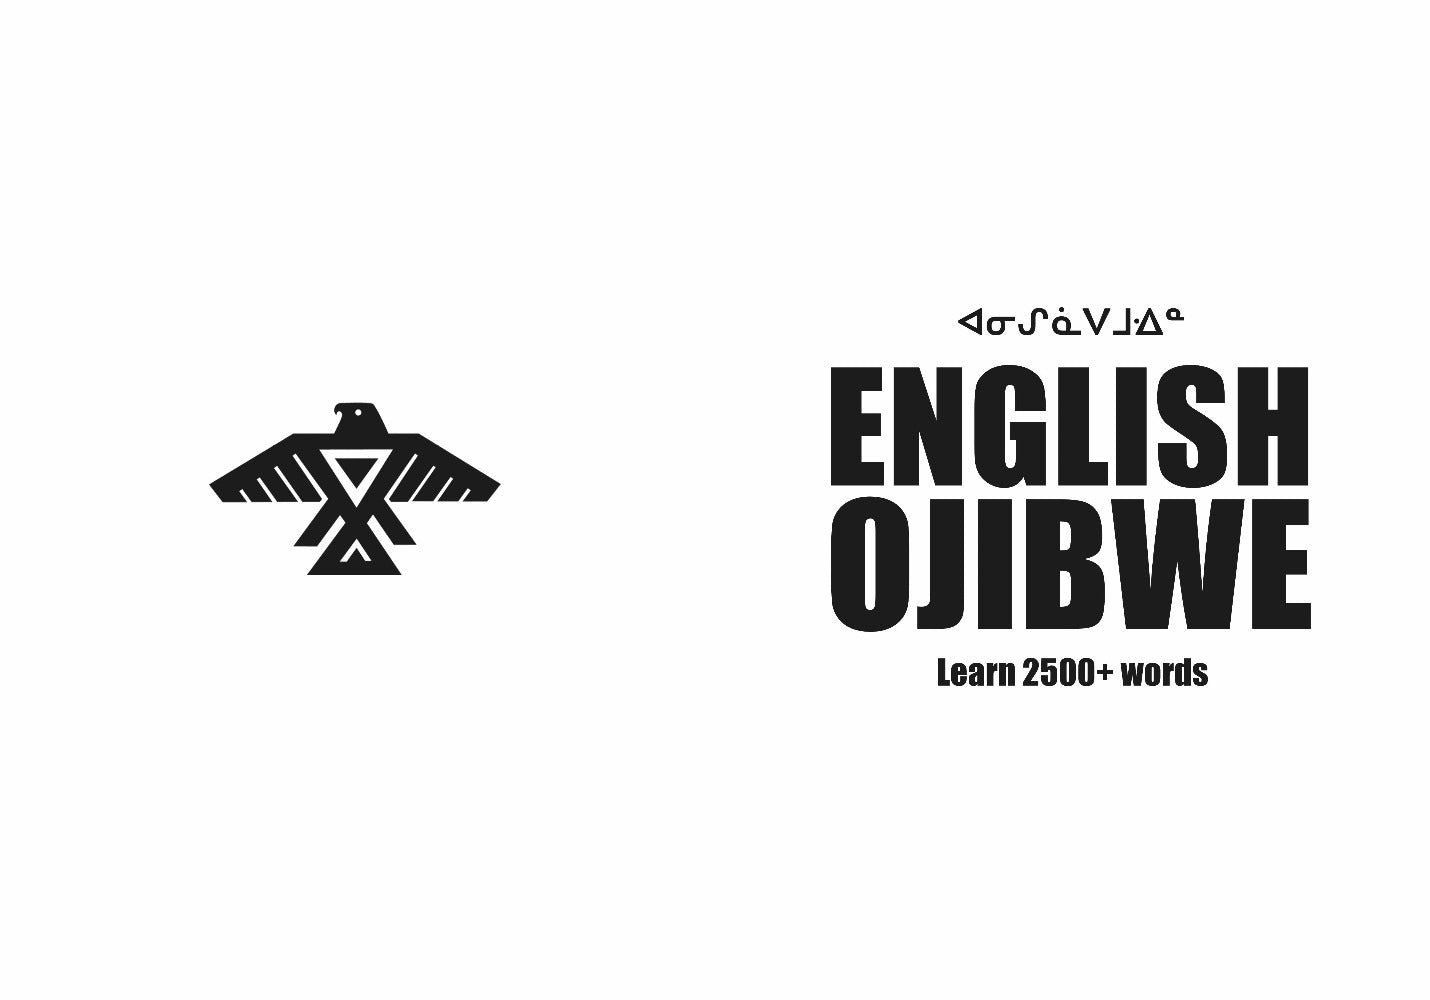 Ojibwe language learning notebook cover